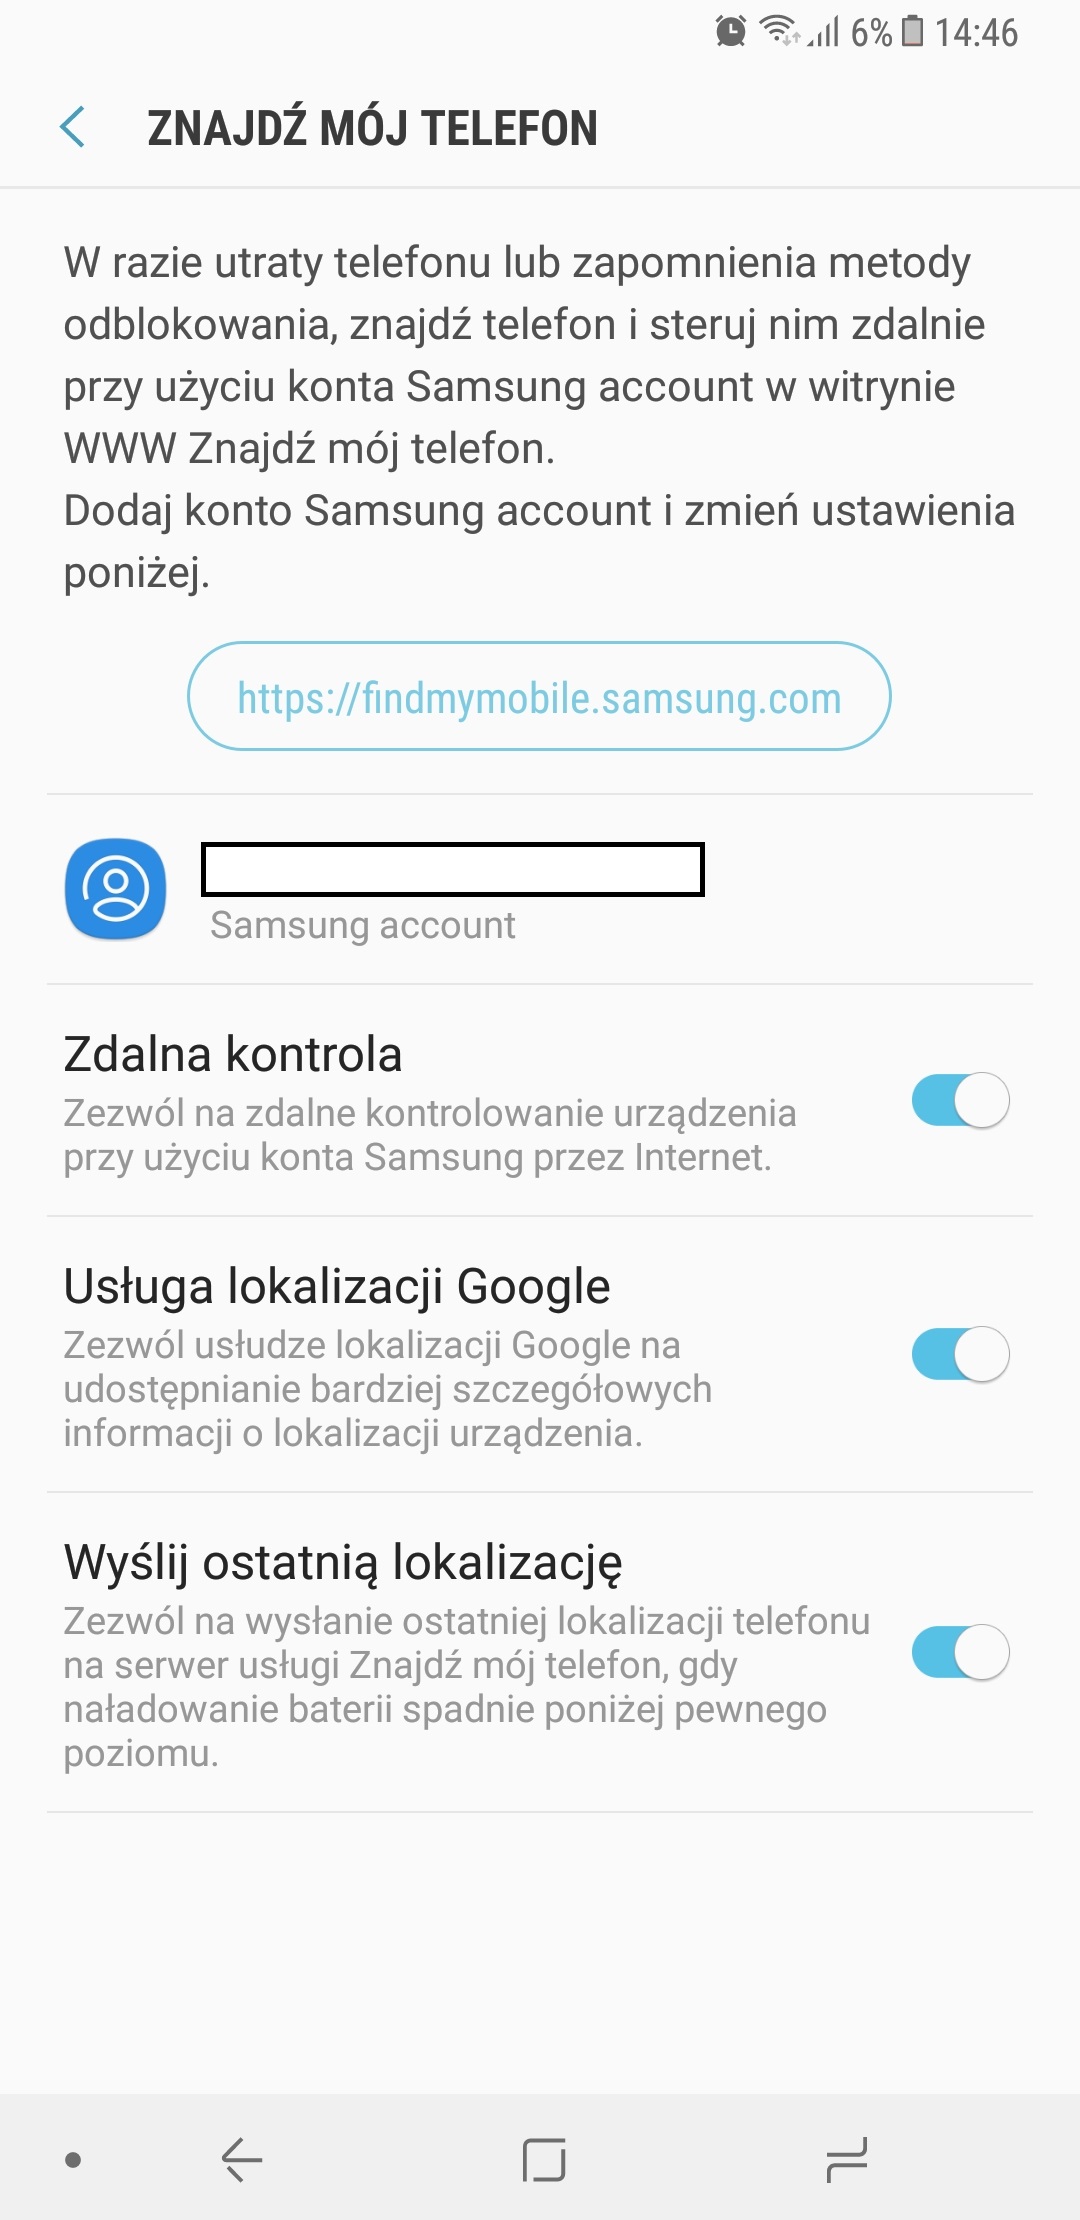 Find My Mobile - opis funkcji. – Strona 5 - Samsung Community